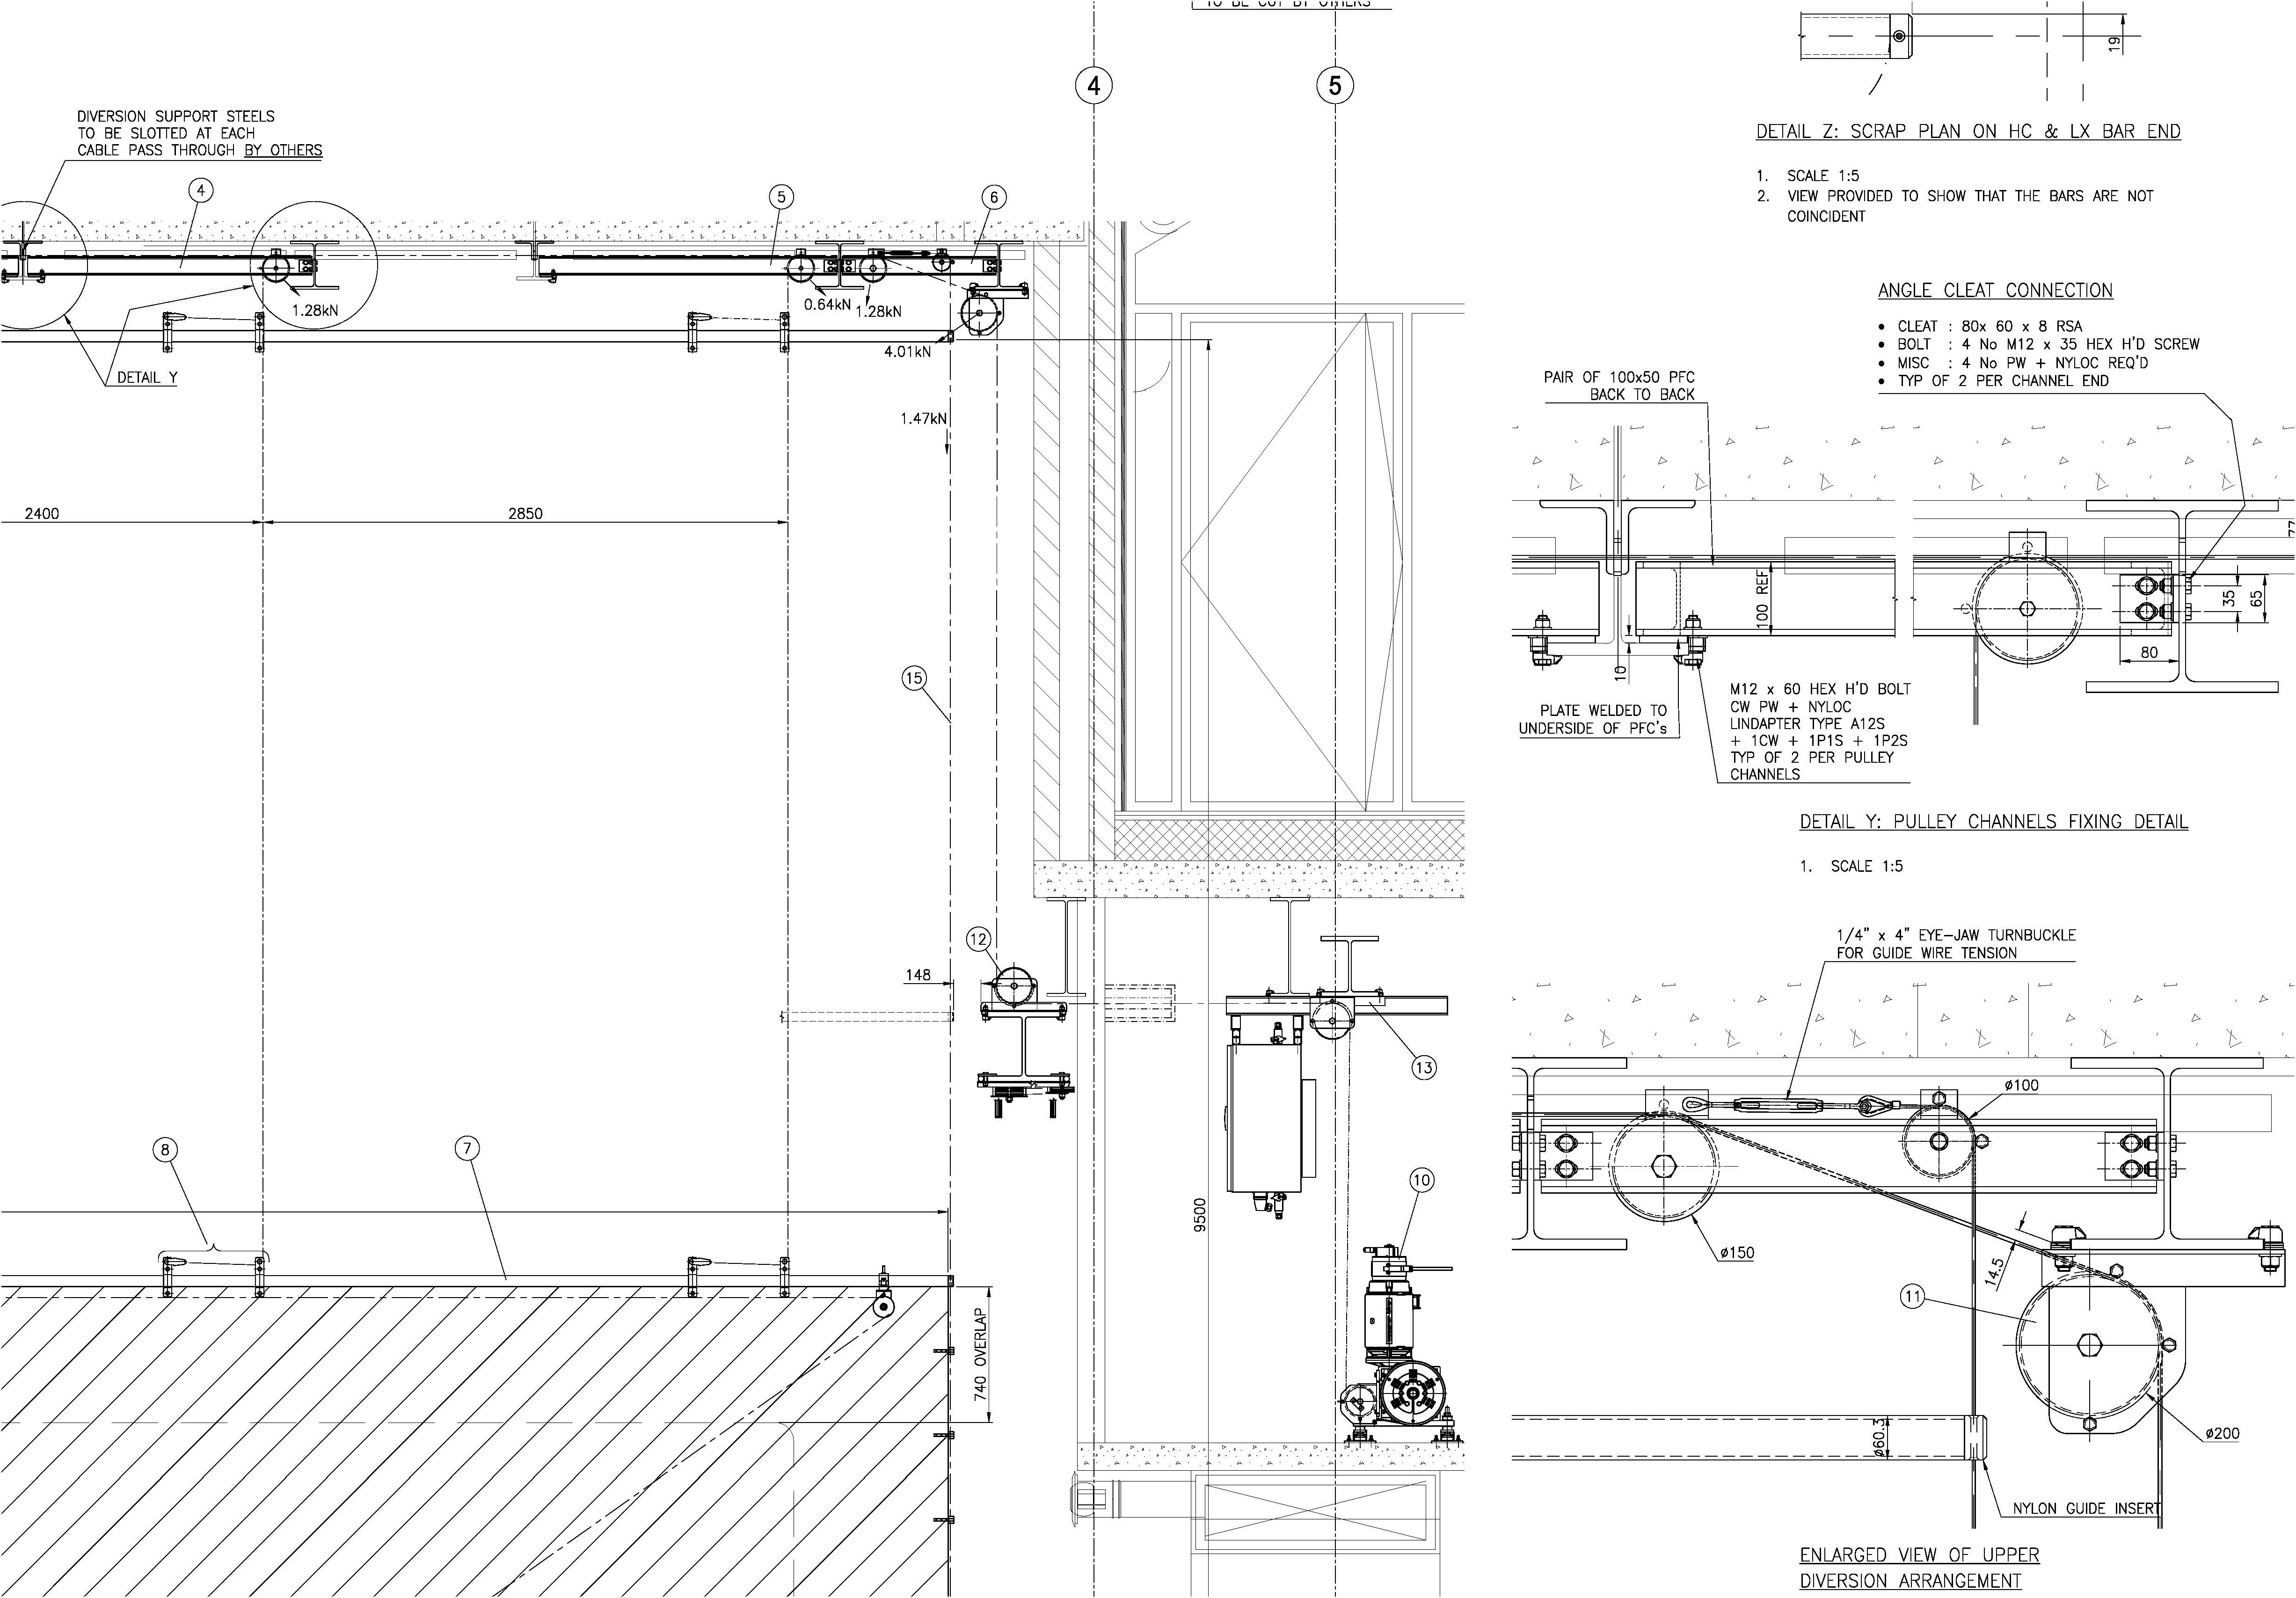 Civil Engineering Drawing at GetDrawings Free download